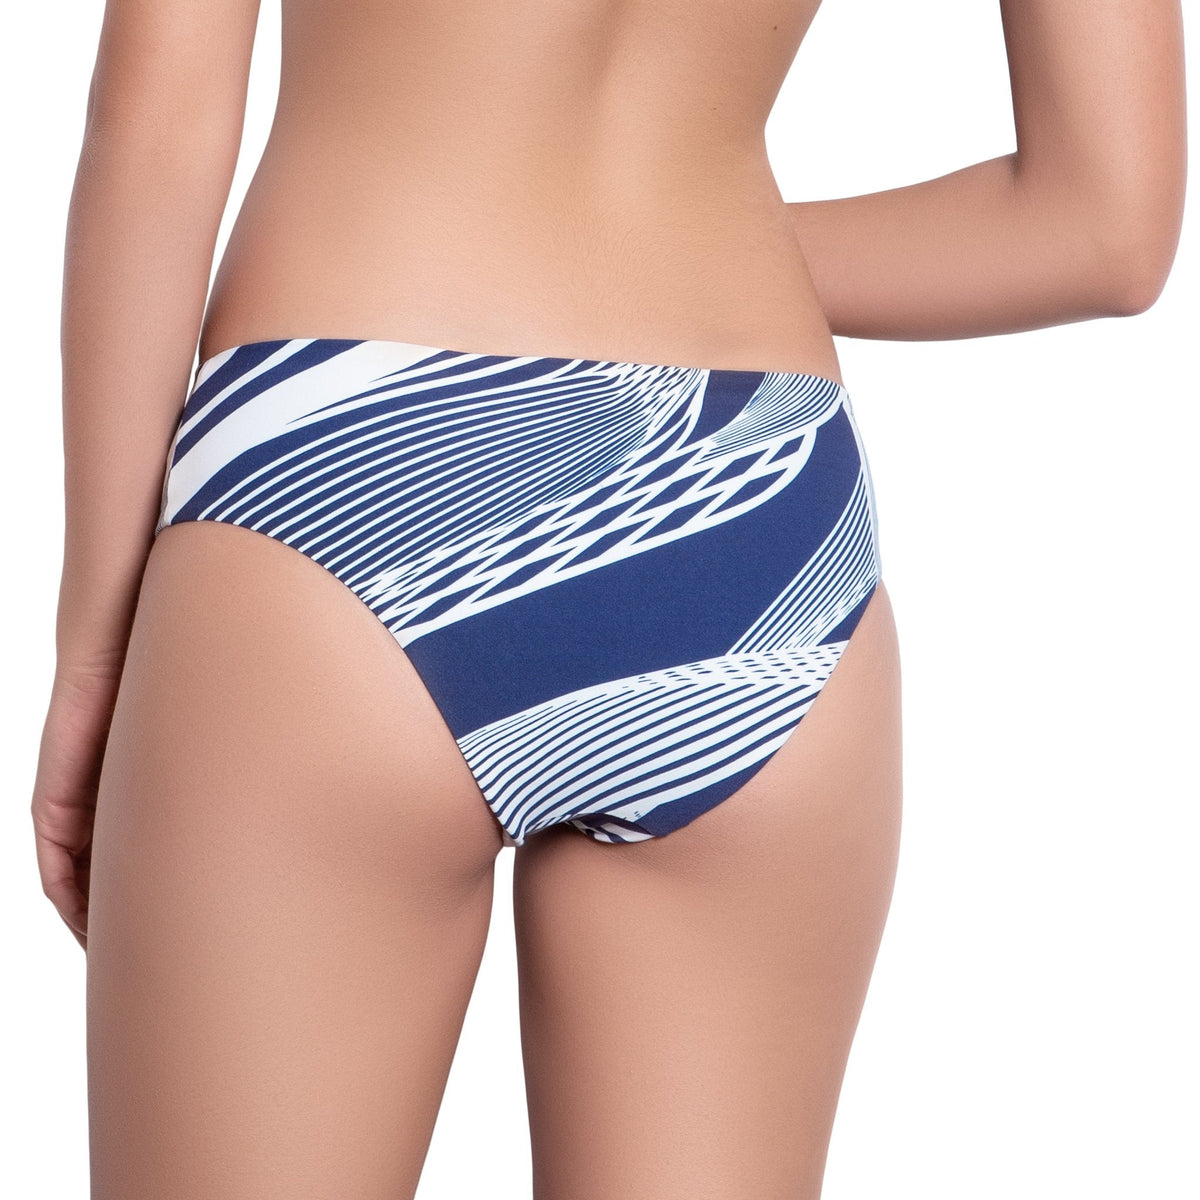 SOPHIE classic panty, printed bikini bottom by ALMA swimwear ‚Äì back view 